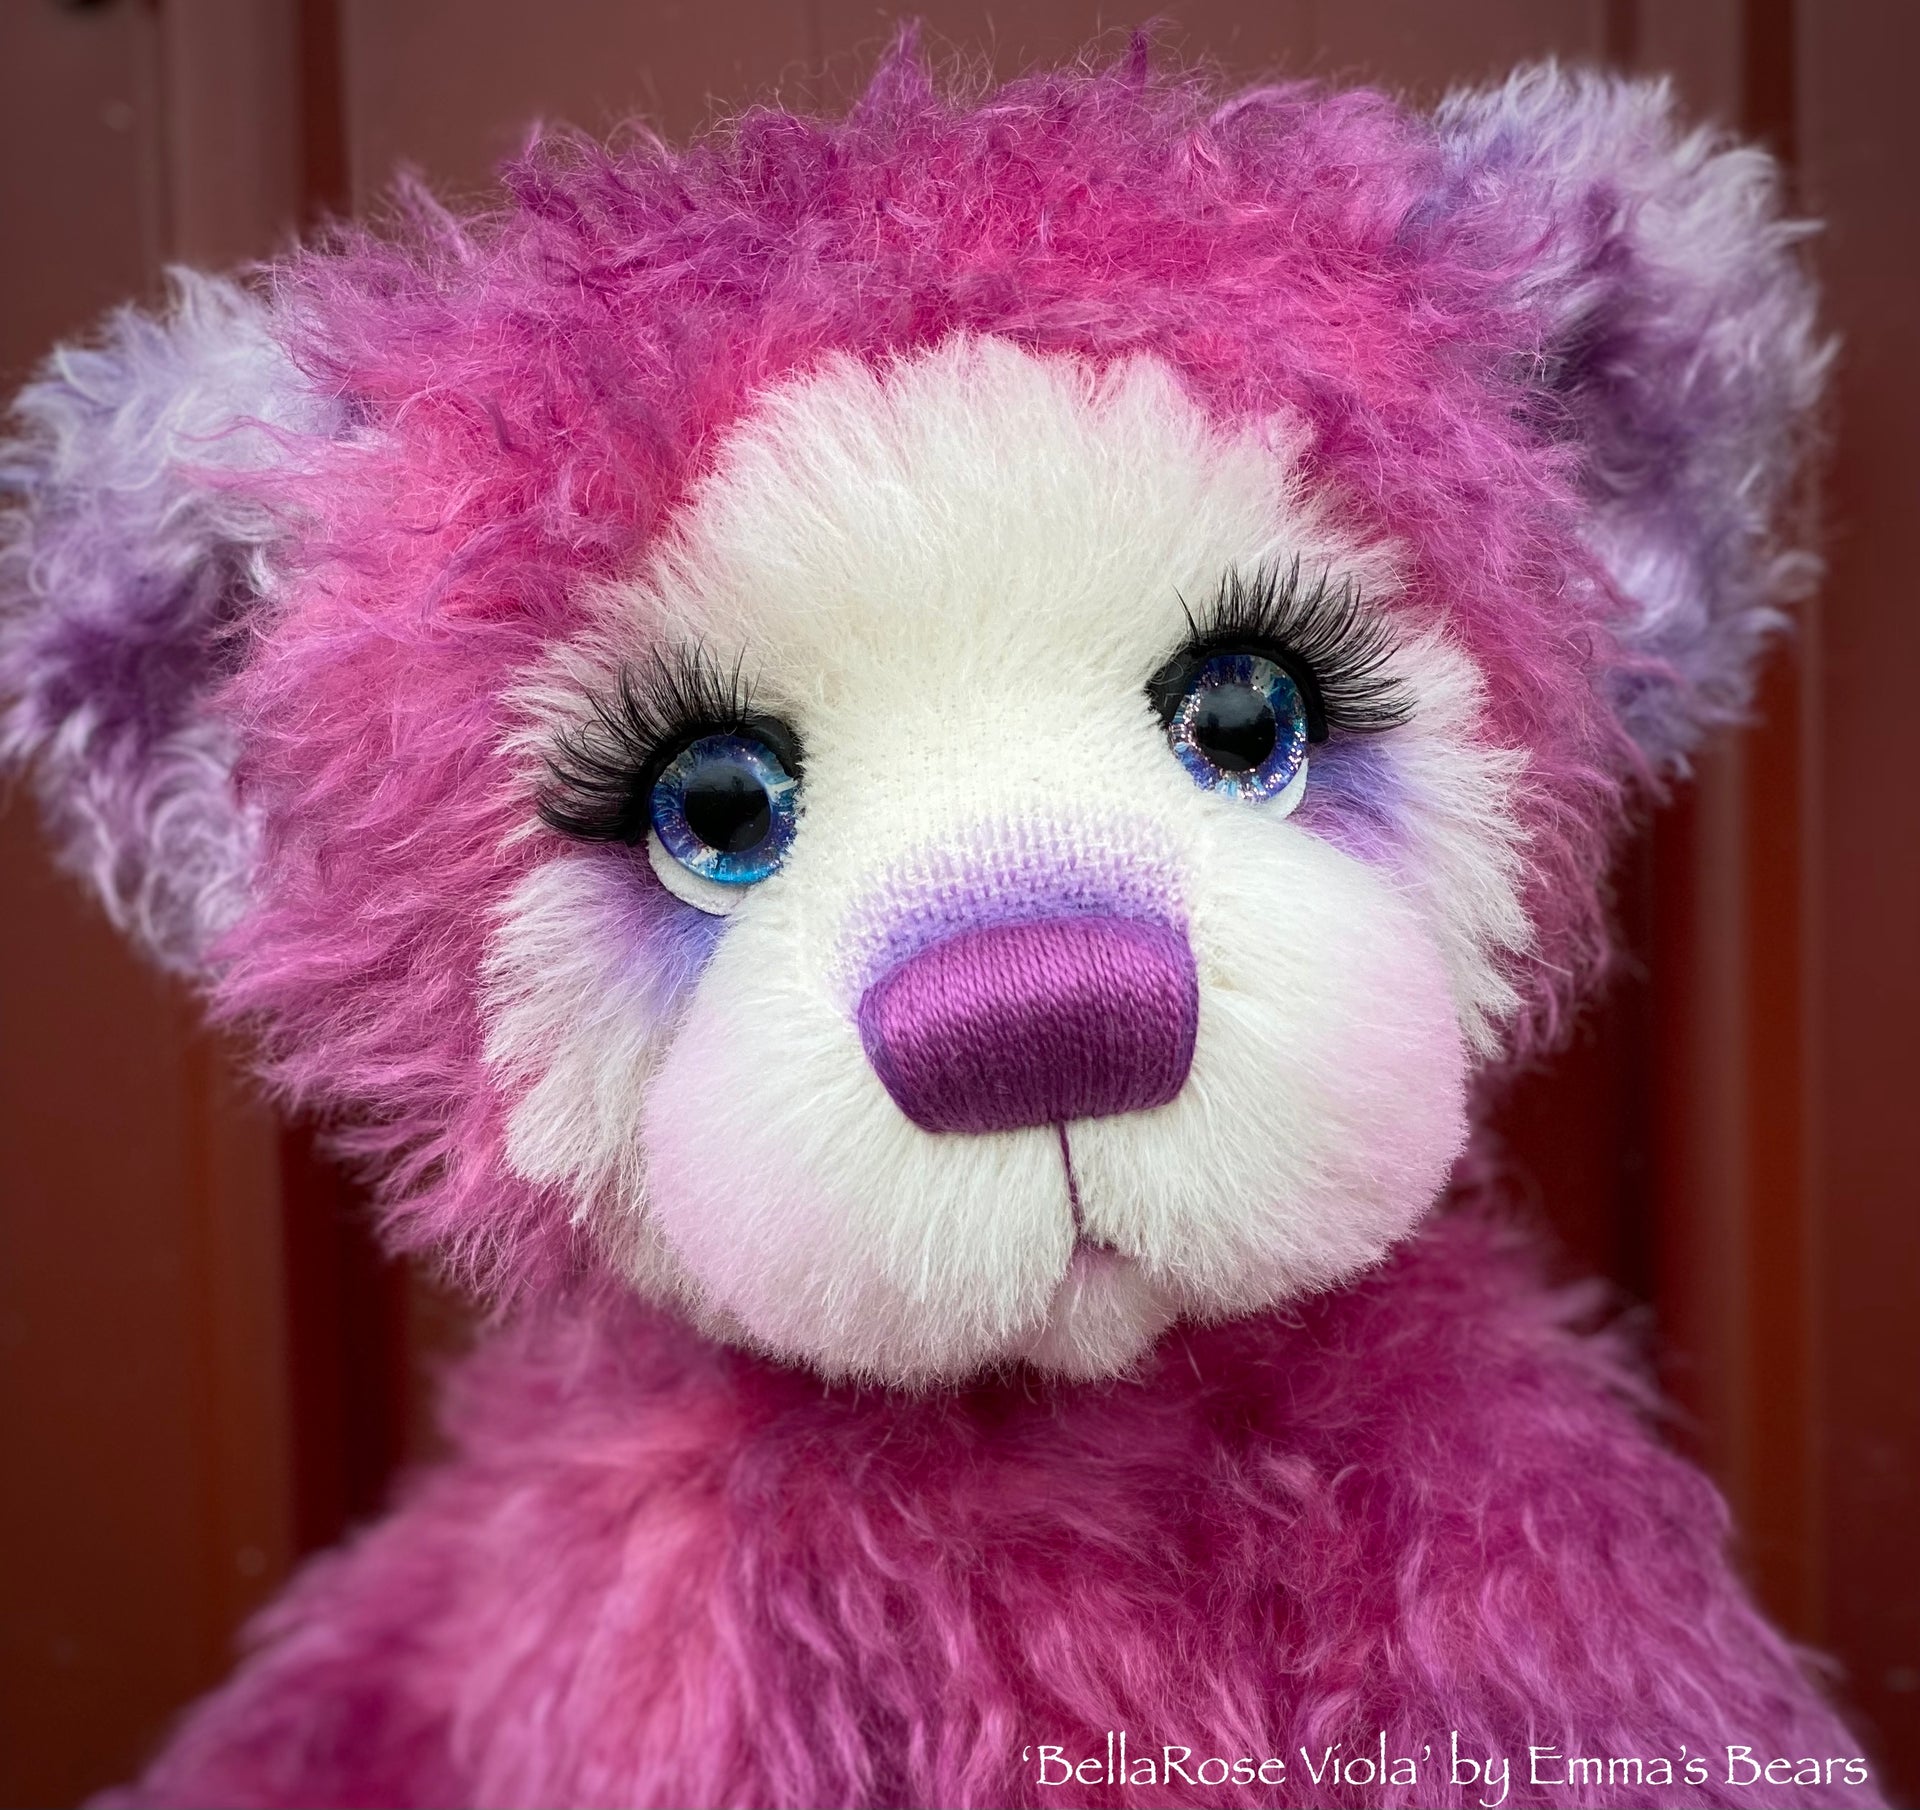 BellaRose Viola - 21" Mohair Toddler Artist Bear by Emma's Bears - OOAK